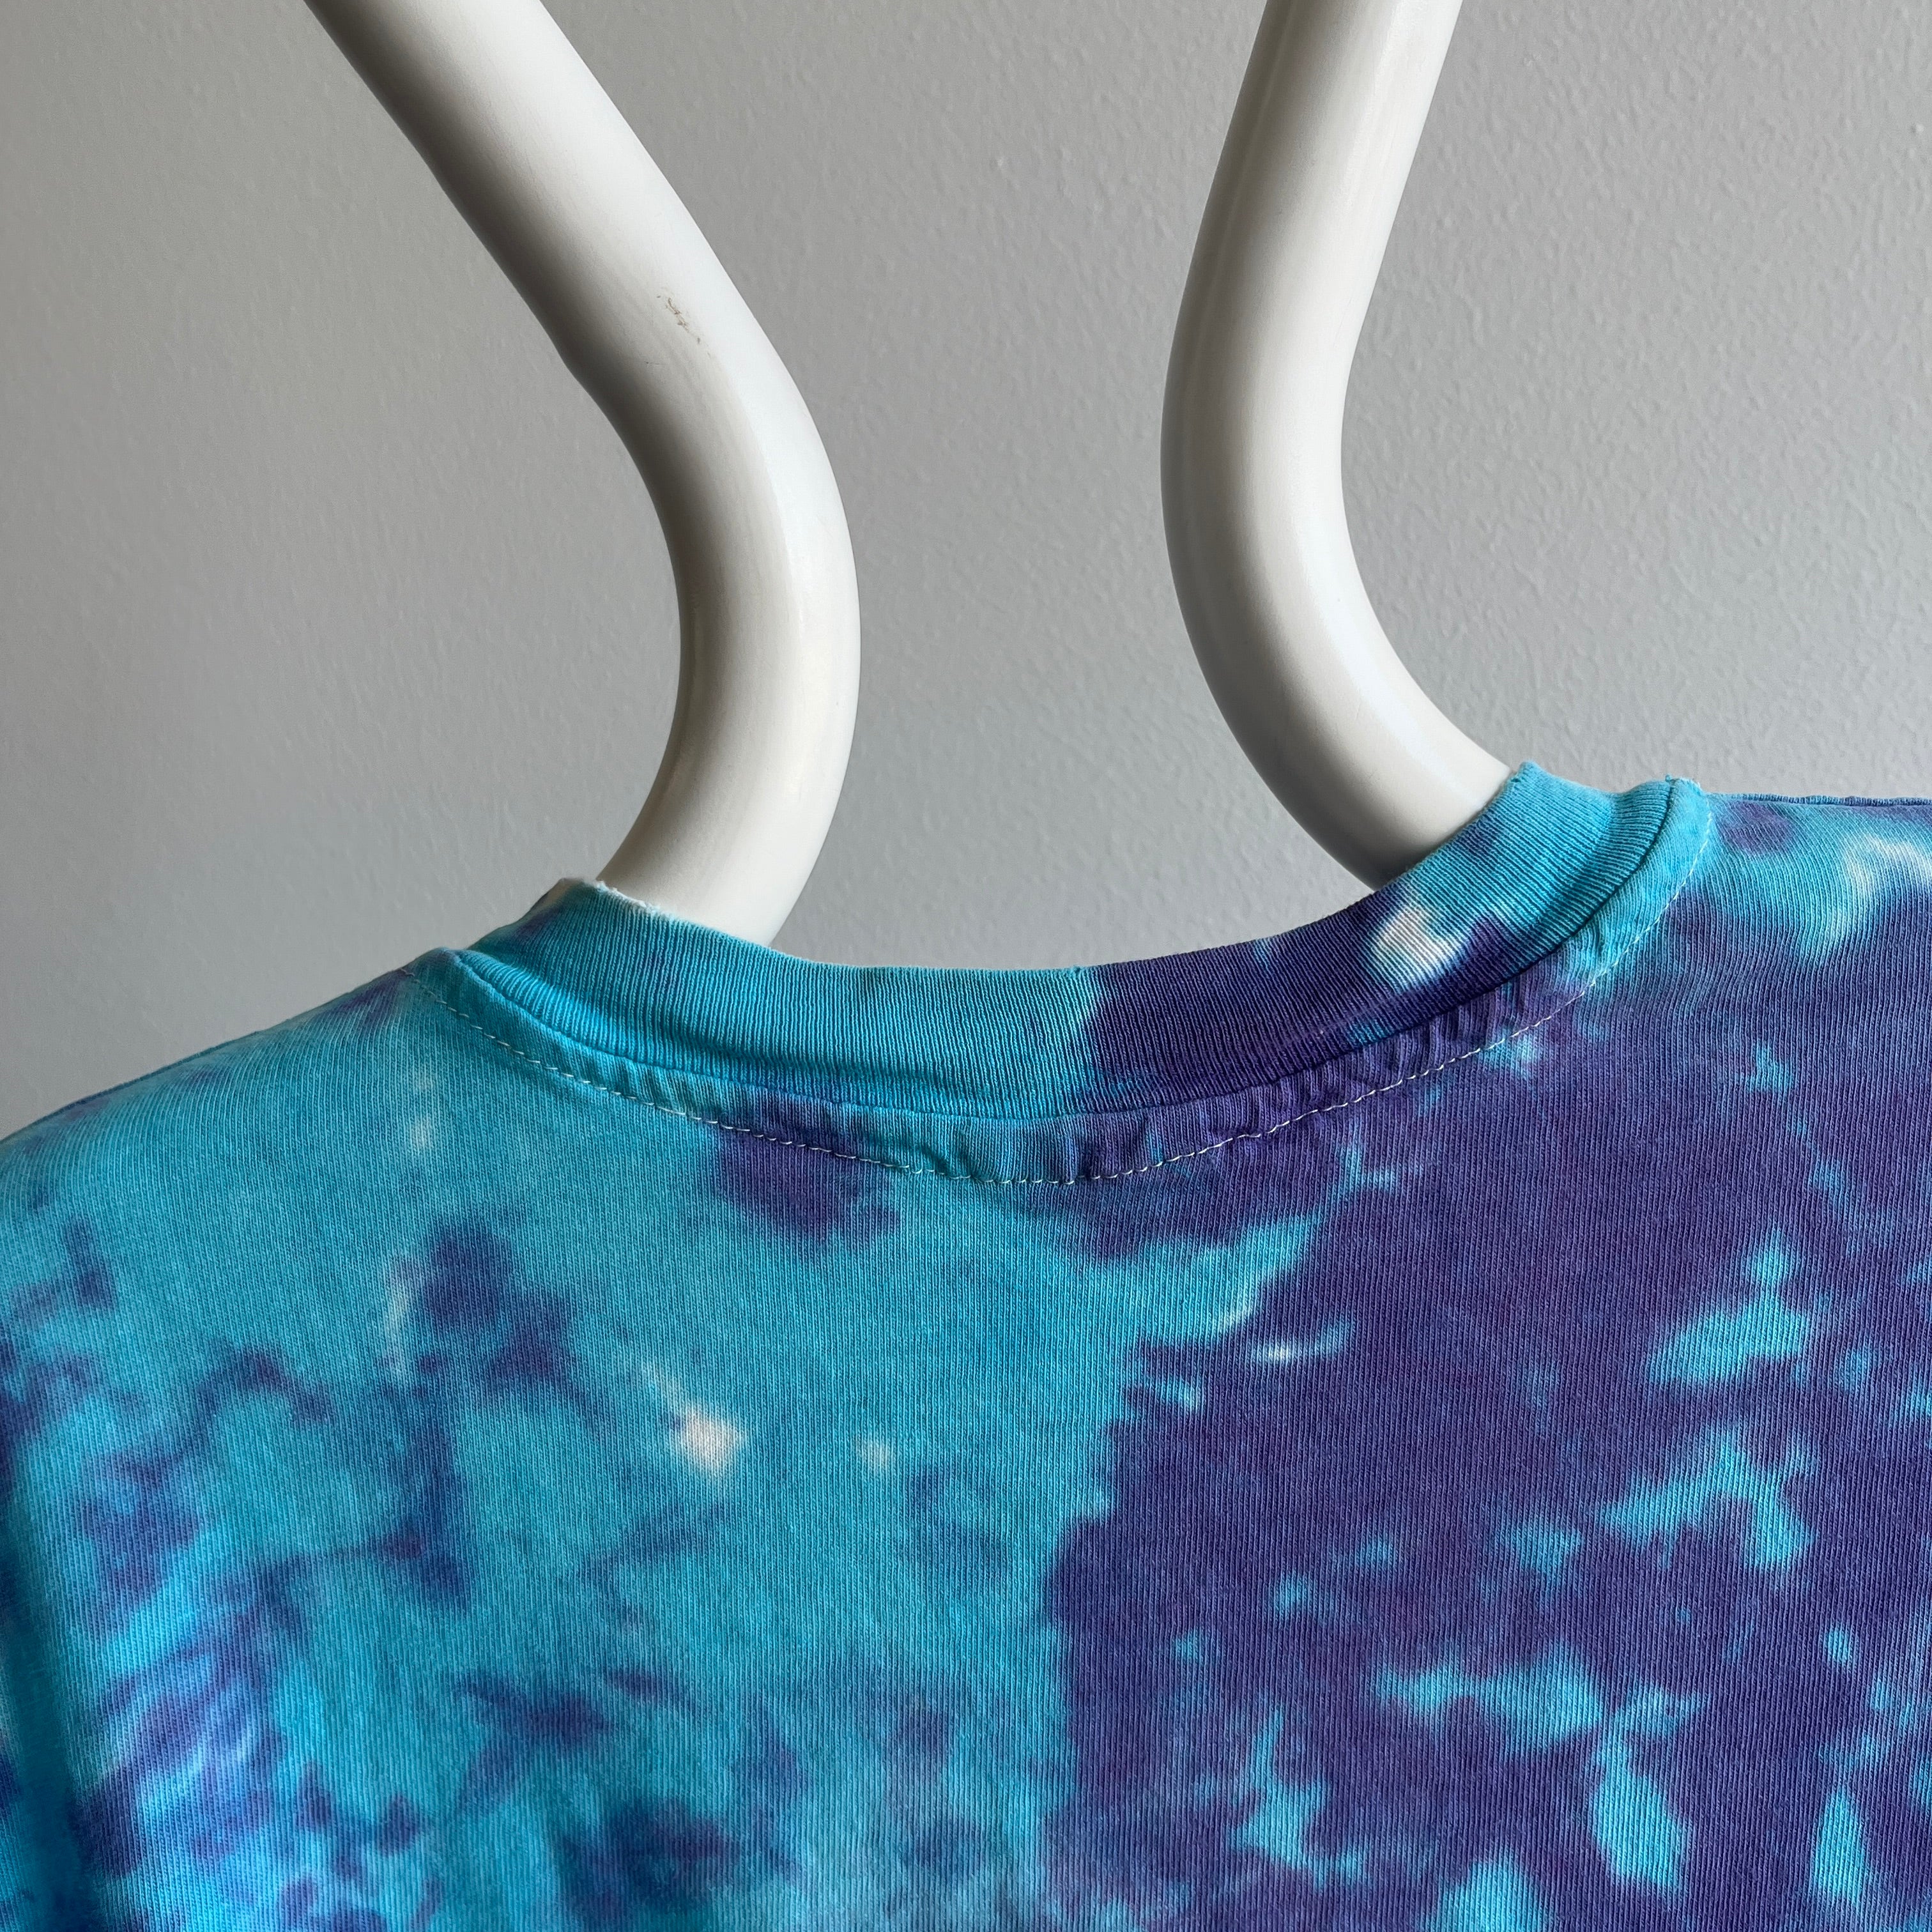 1980s Rad Worn Tie Dye T-Shirt - Cool Wear Holes